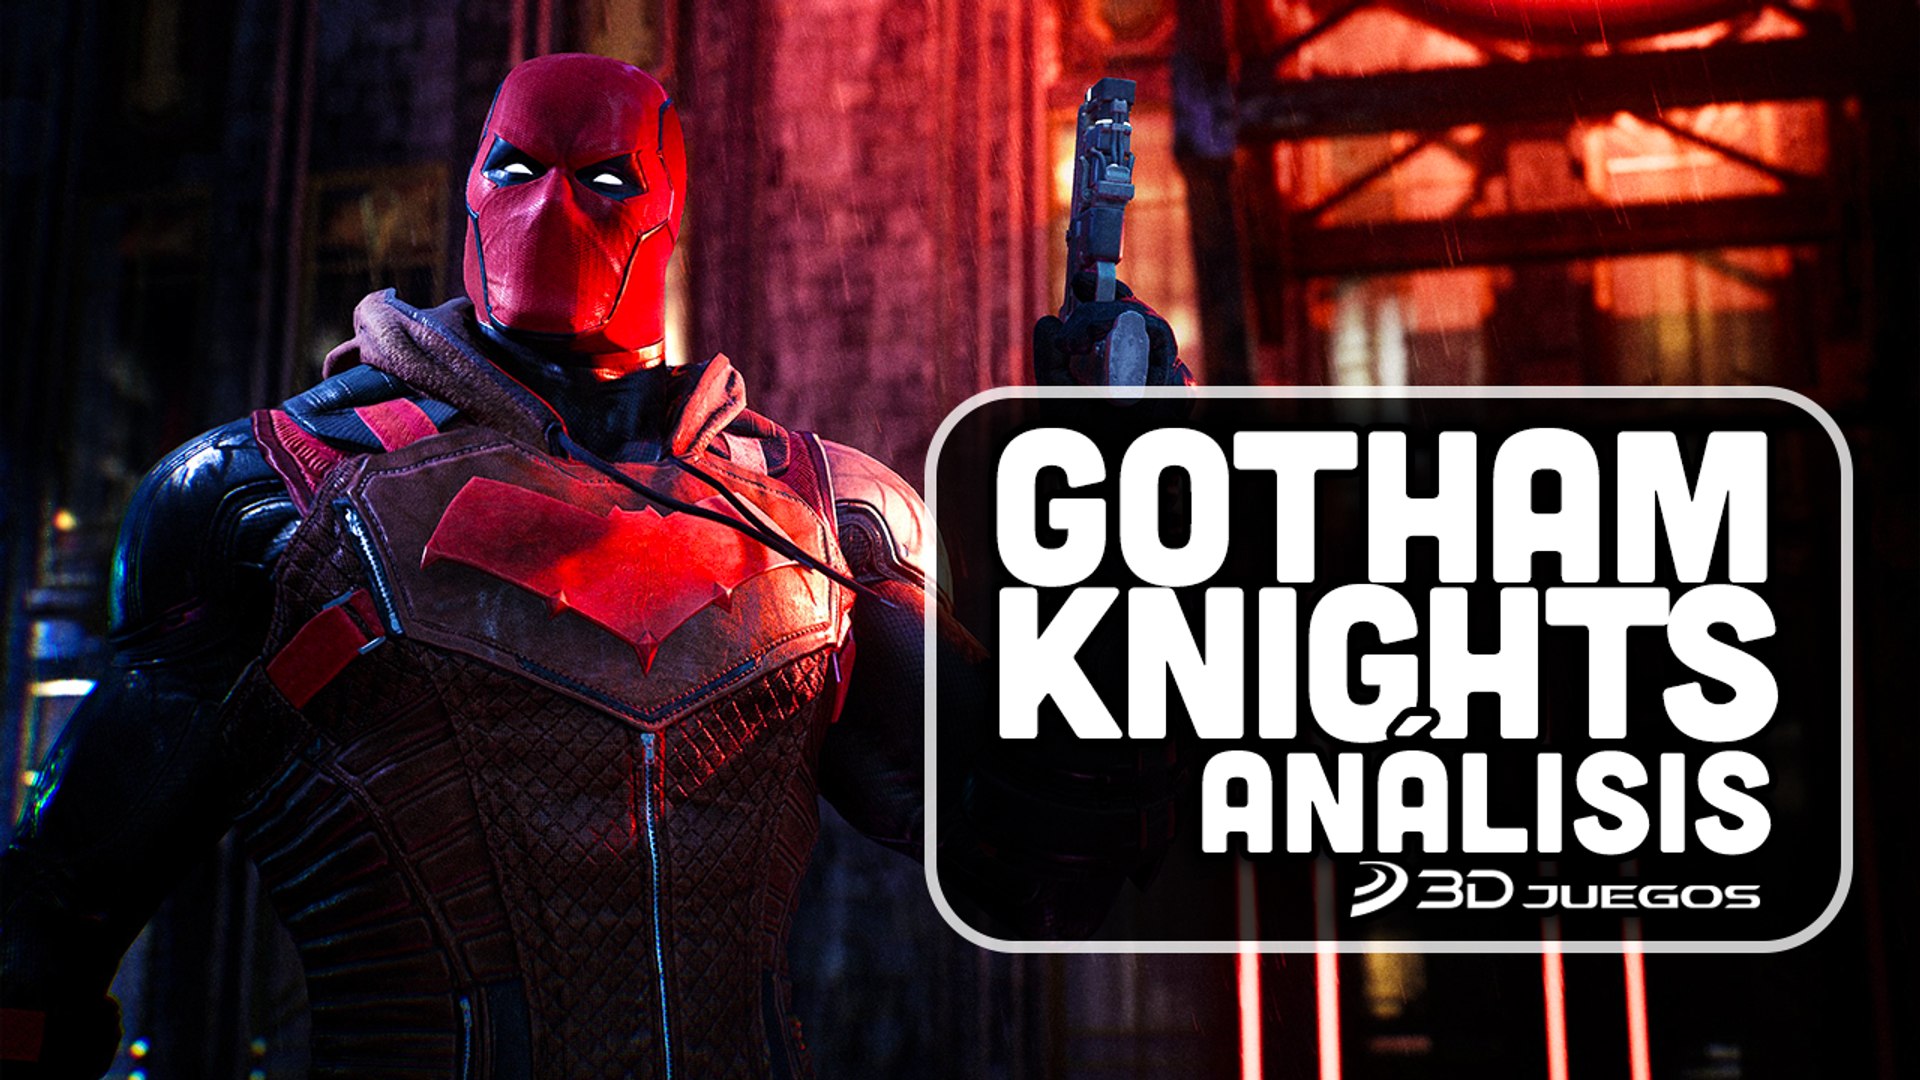 No echamos de menos a Batman - Análisis de Gotham Knights - Vídeo  Dailymotion